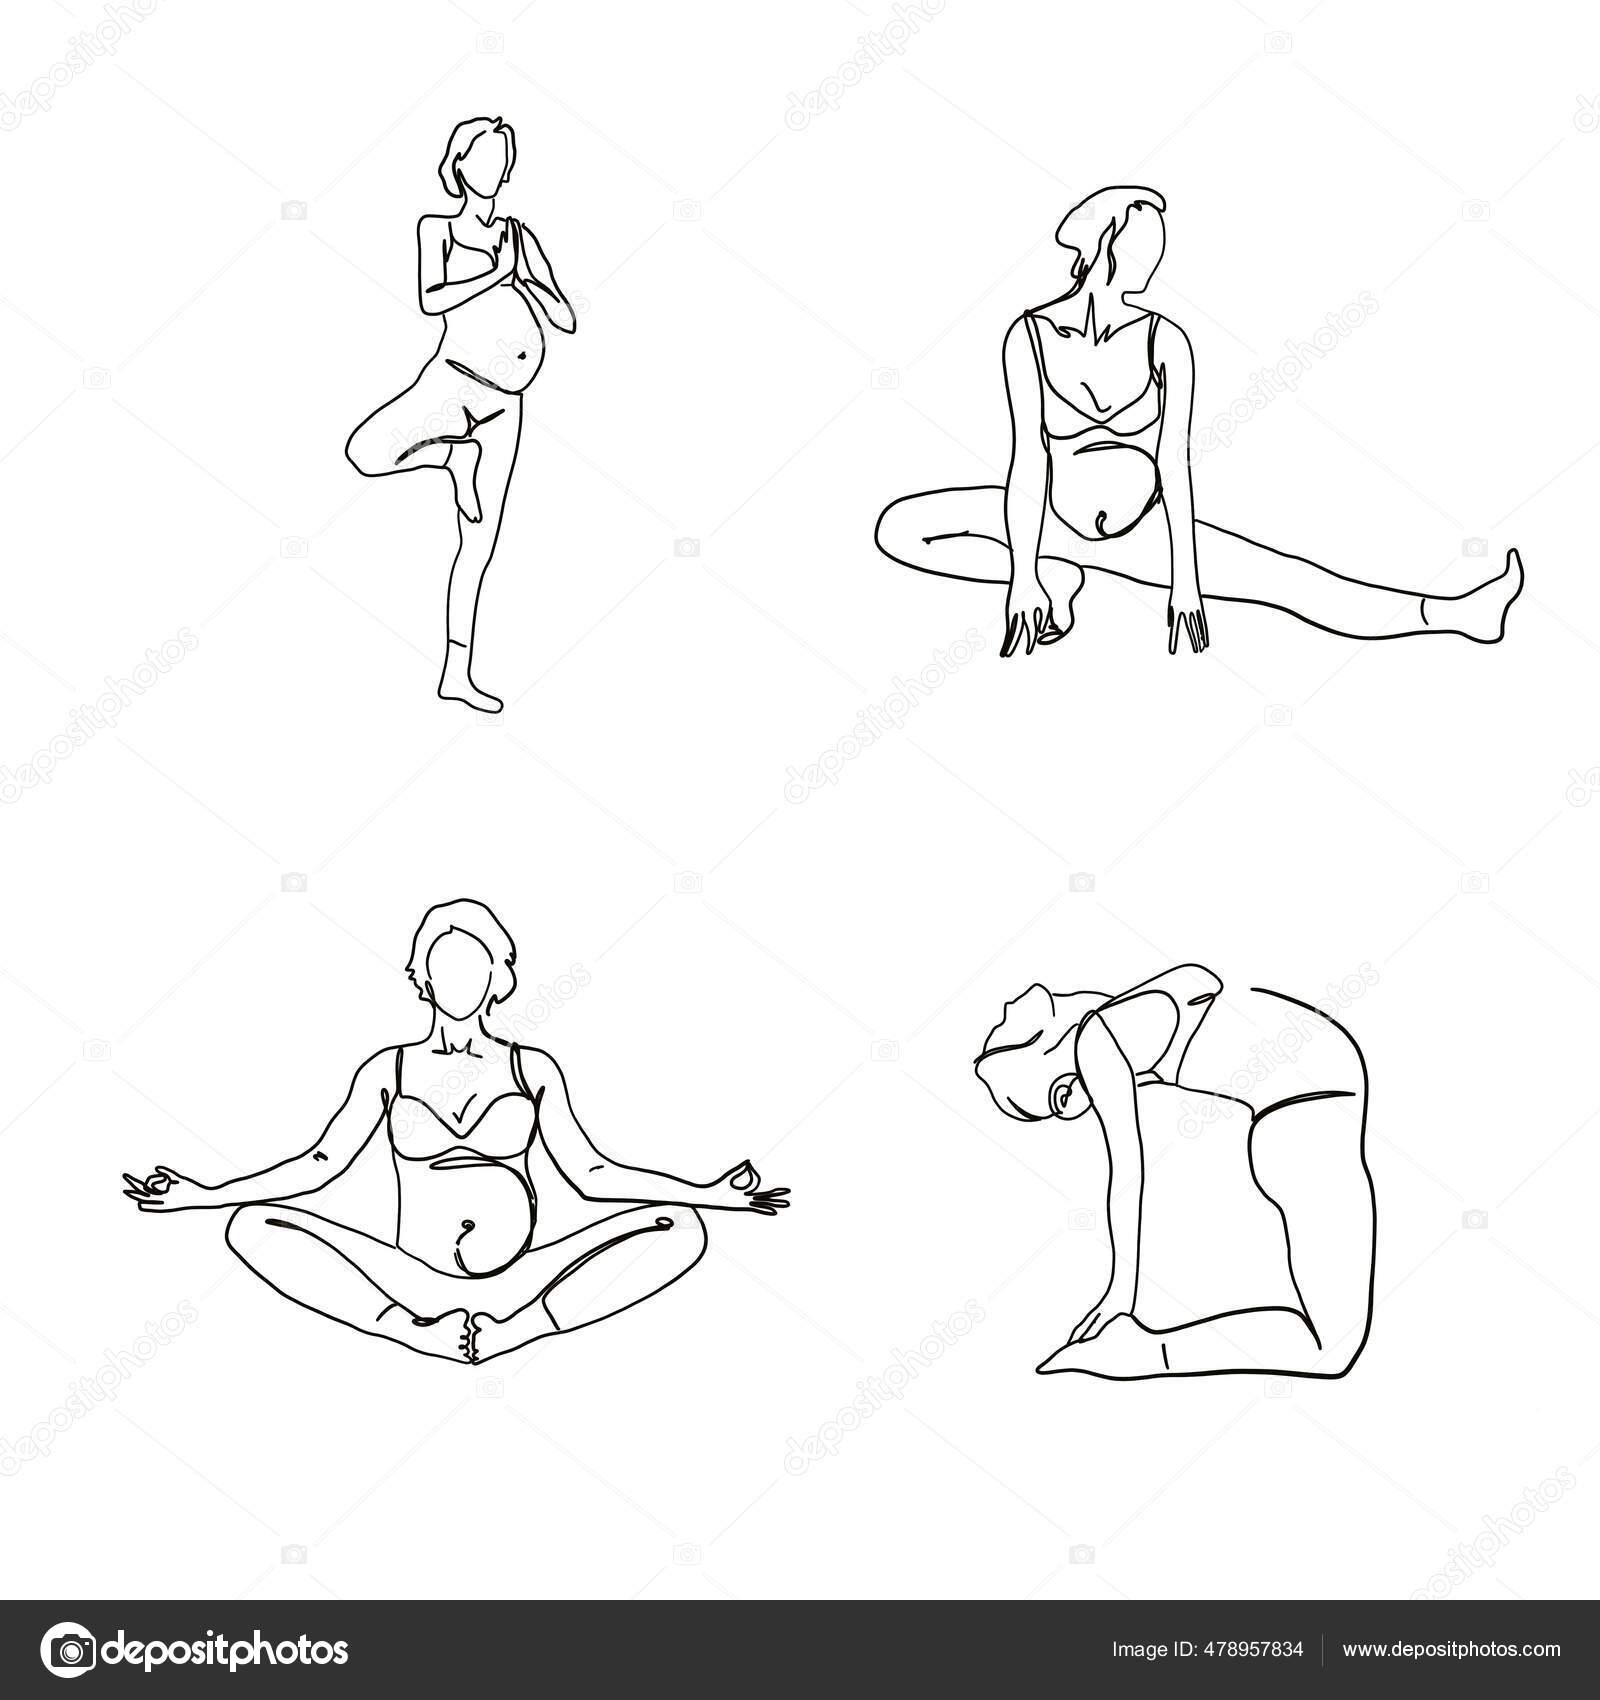 Sketch of a woman in a dynamic yoga pose on Craiyon